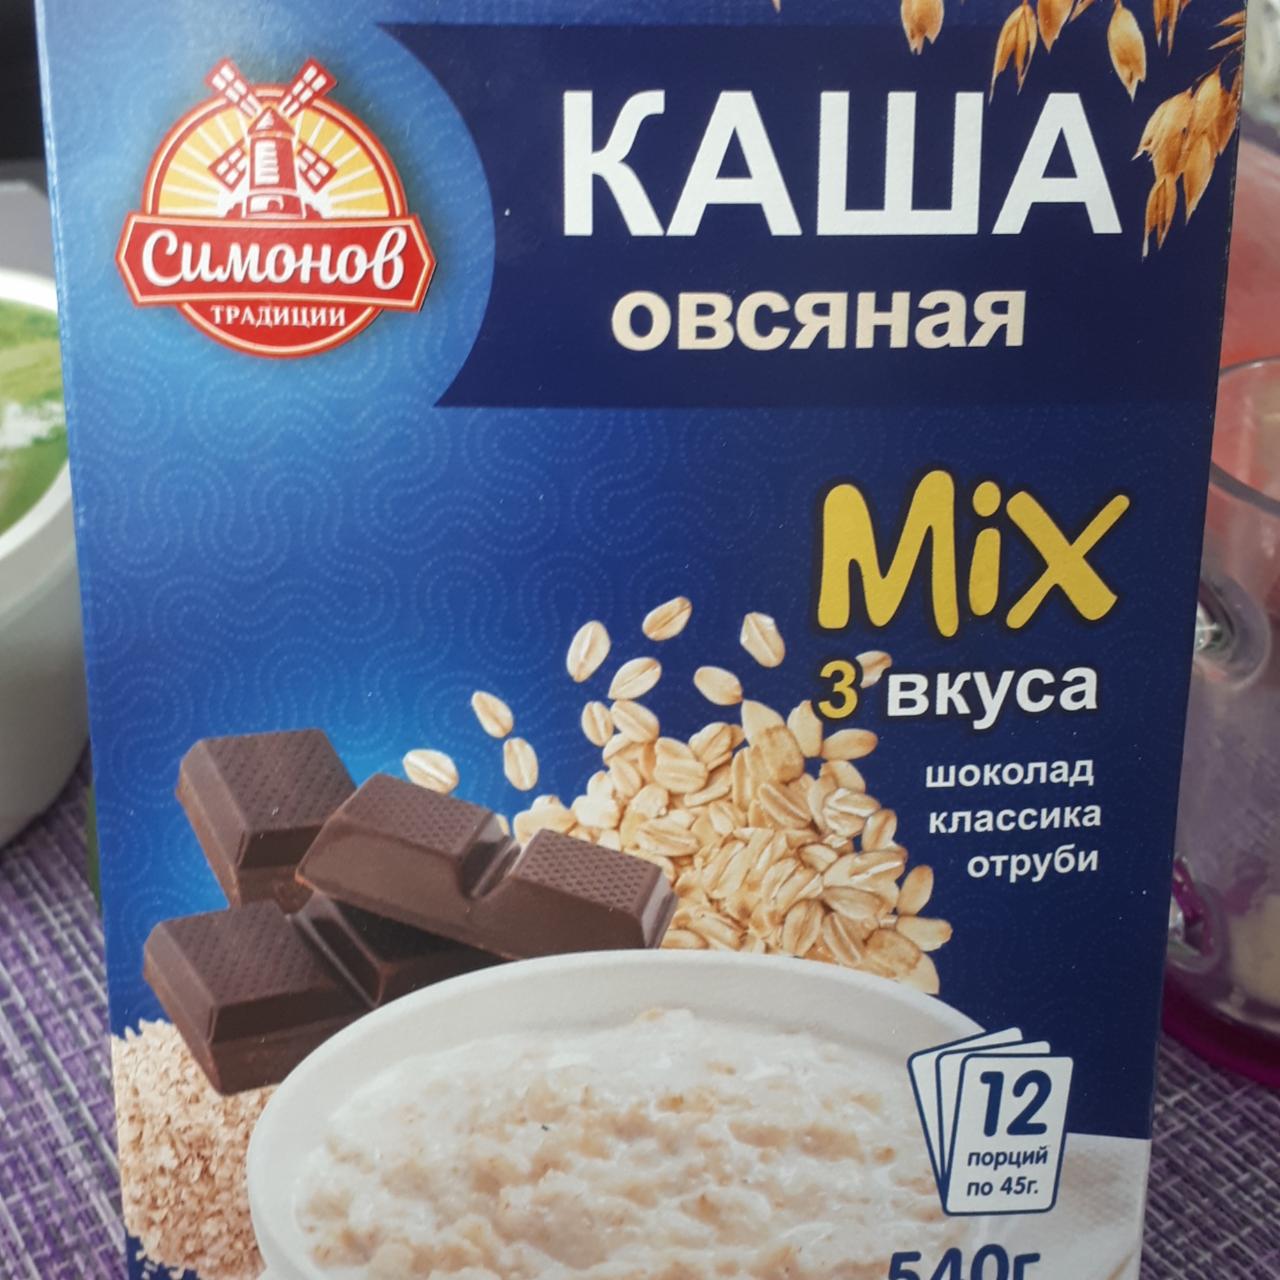 Фото - каша овсяная MIX 3 вкуса шоколад классика отруби Симонов